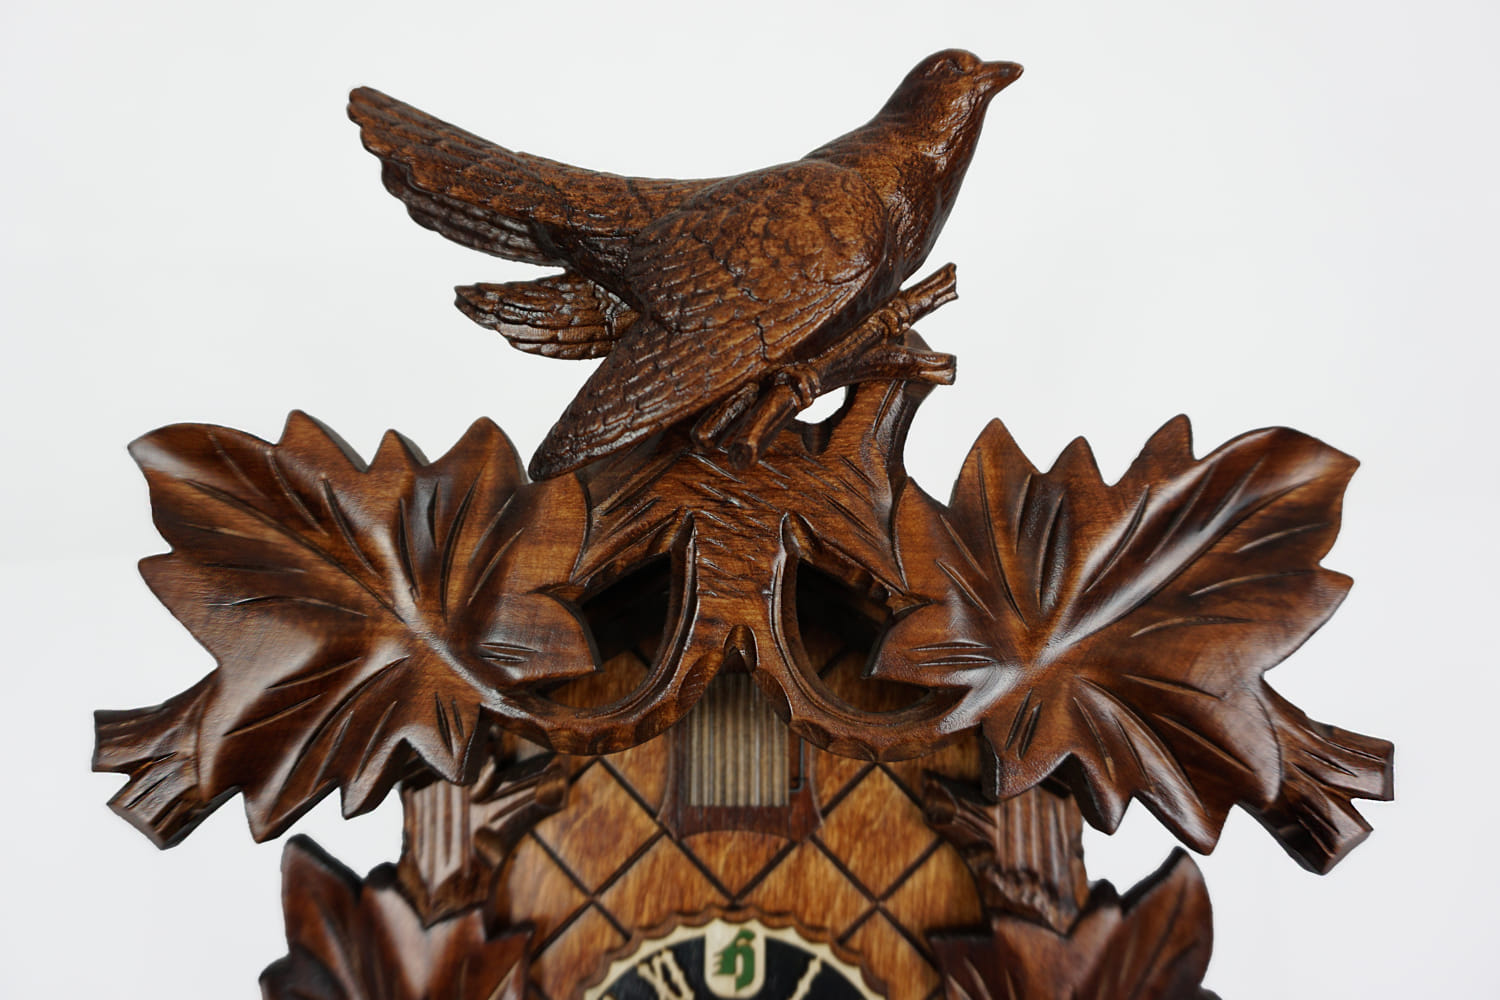 Cuckoo Clock | Traditional, Bird on Top | 8 Day Movement